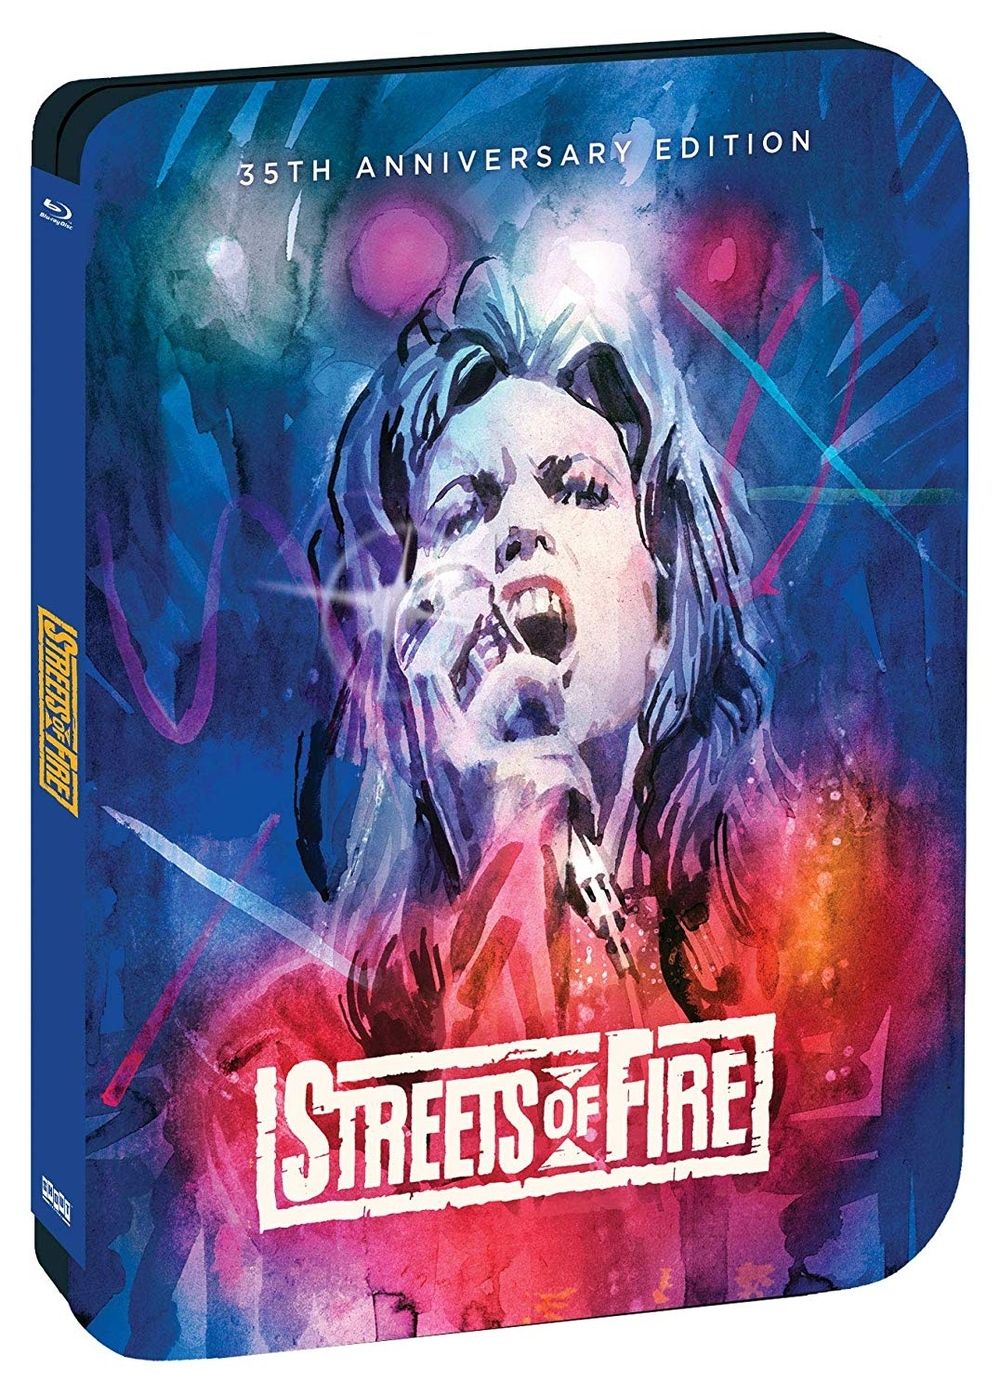 Streets of Fire Blu-ray Steelbook Cover Art